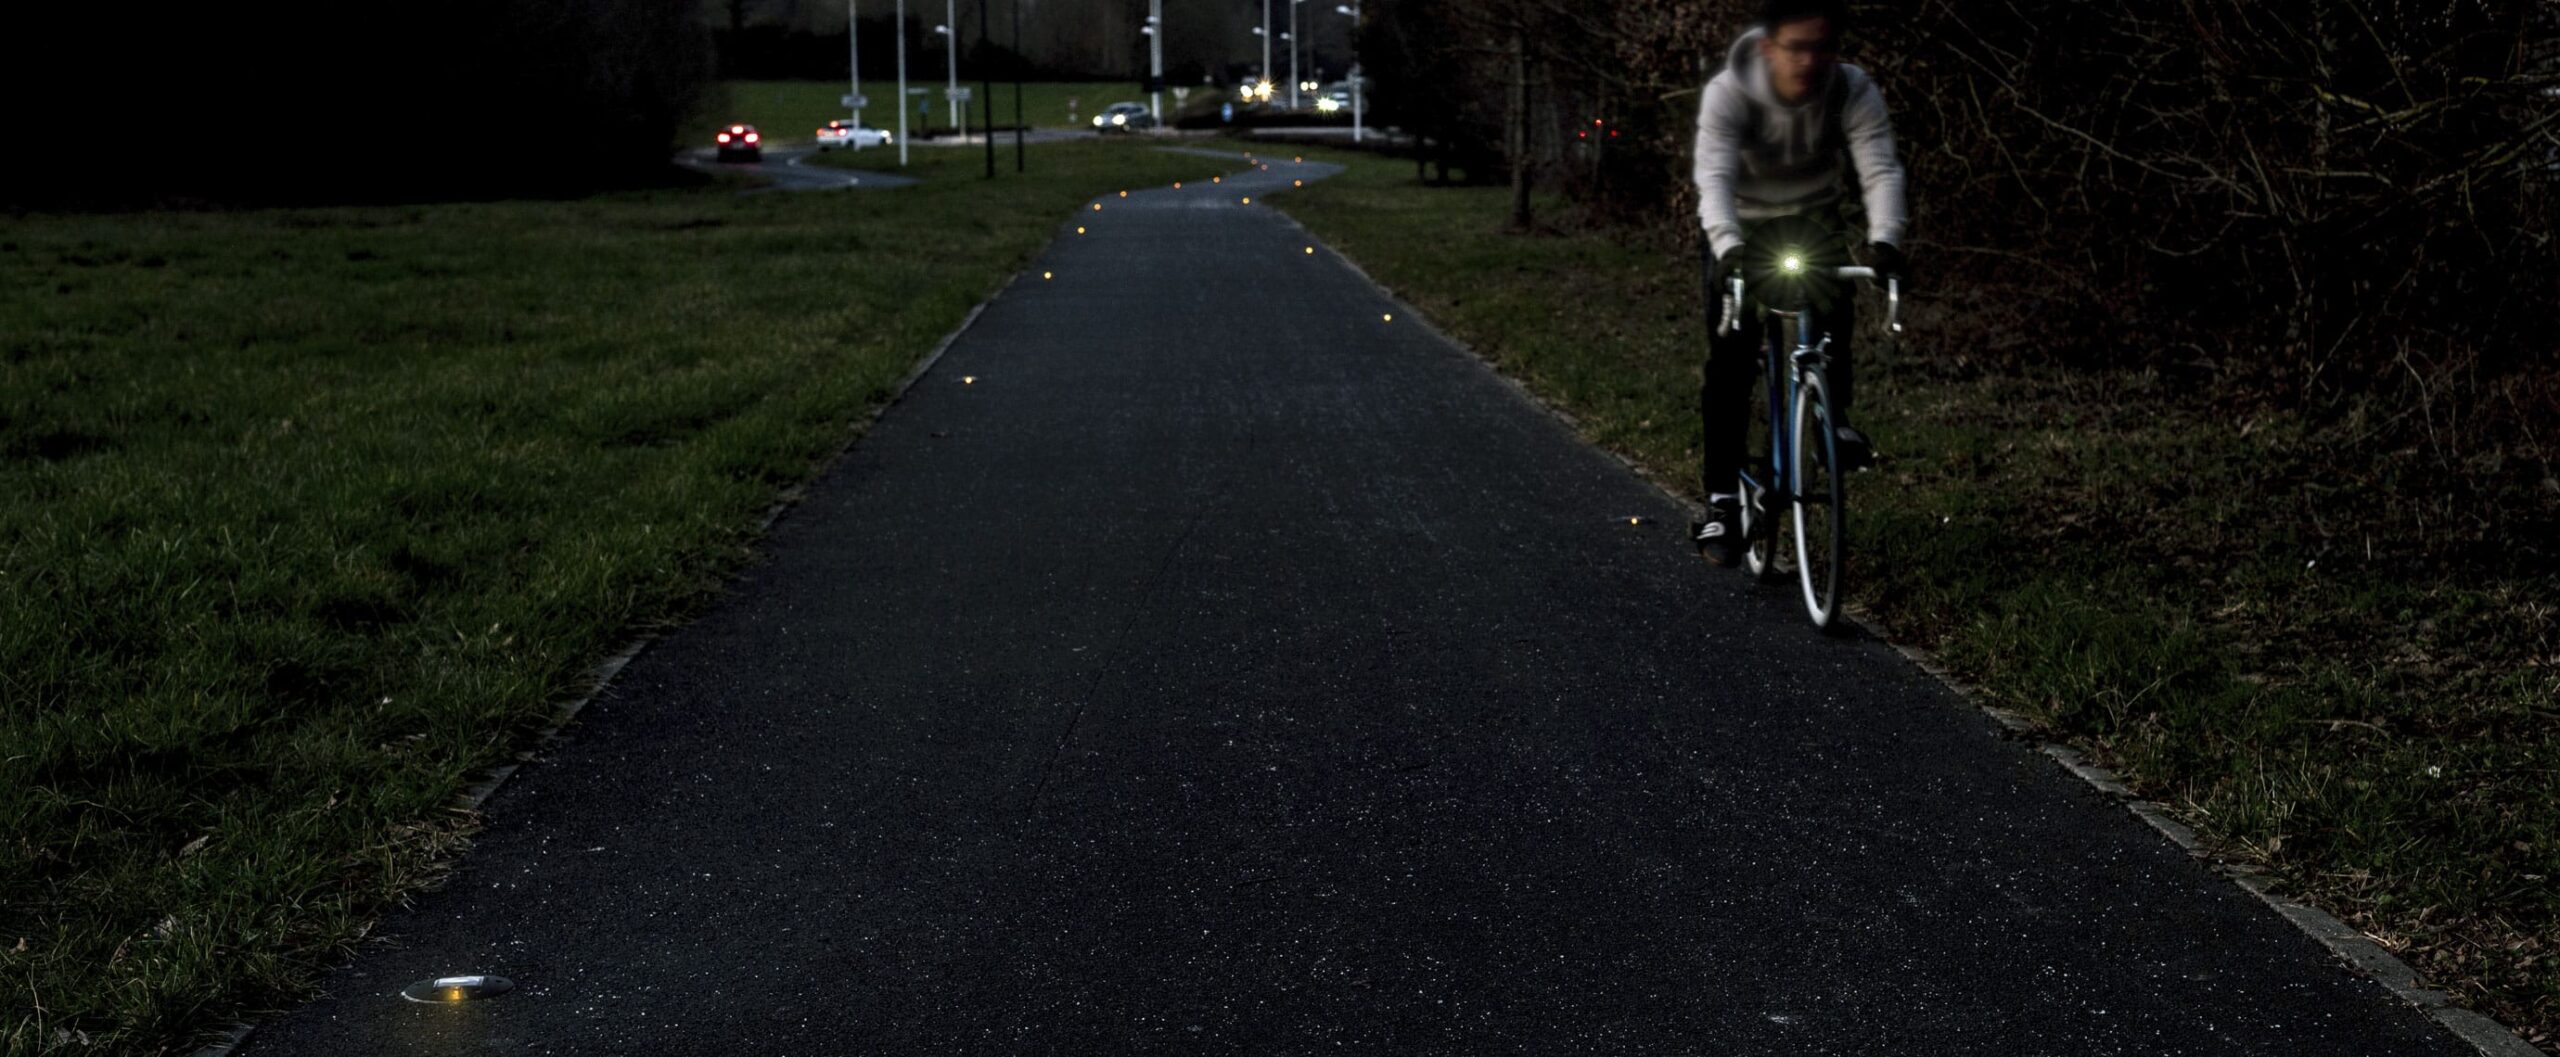 Balisage LED d'une piste cyclable : La Vélodyssée - ECO-143 Eco-Innov